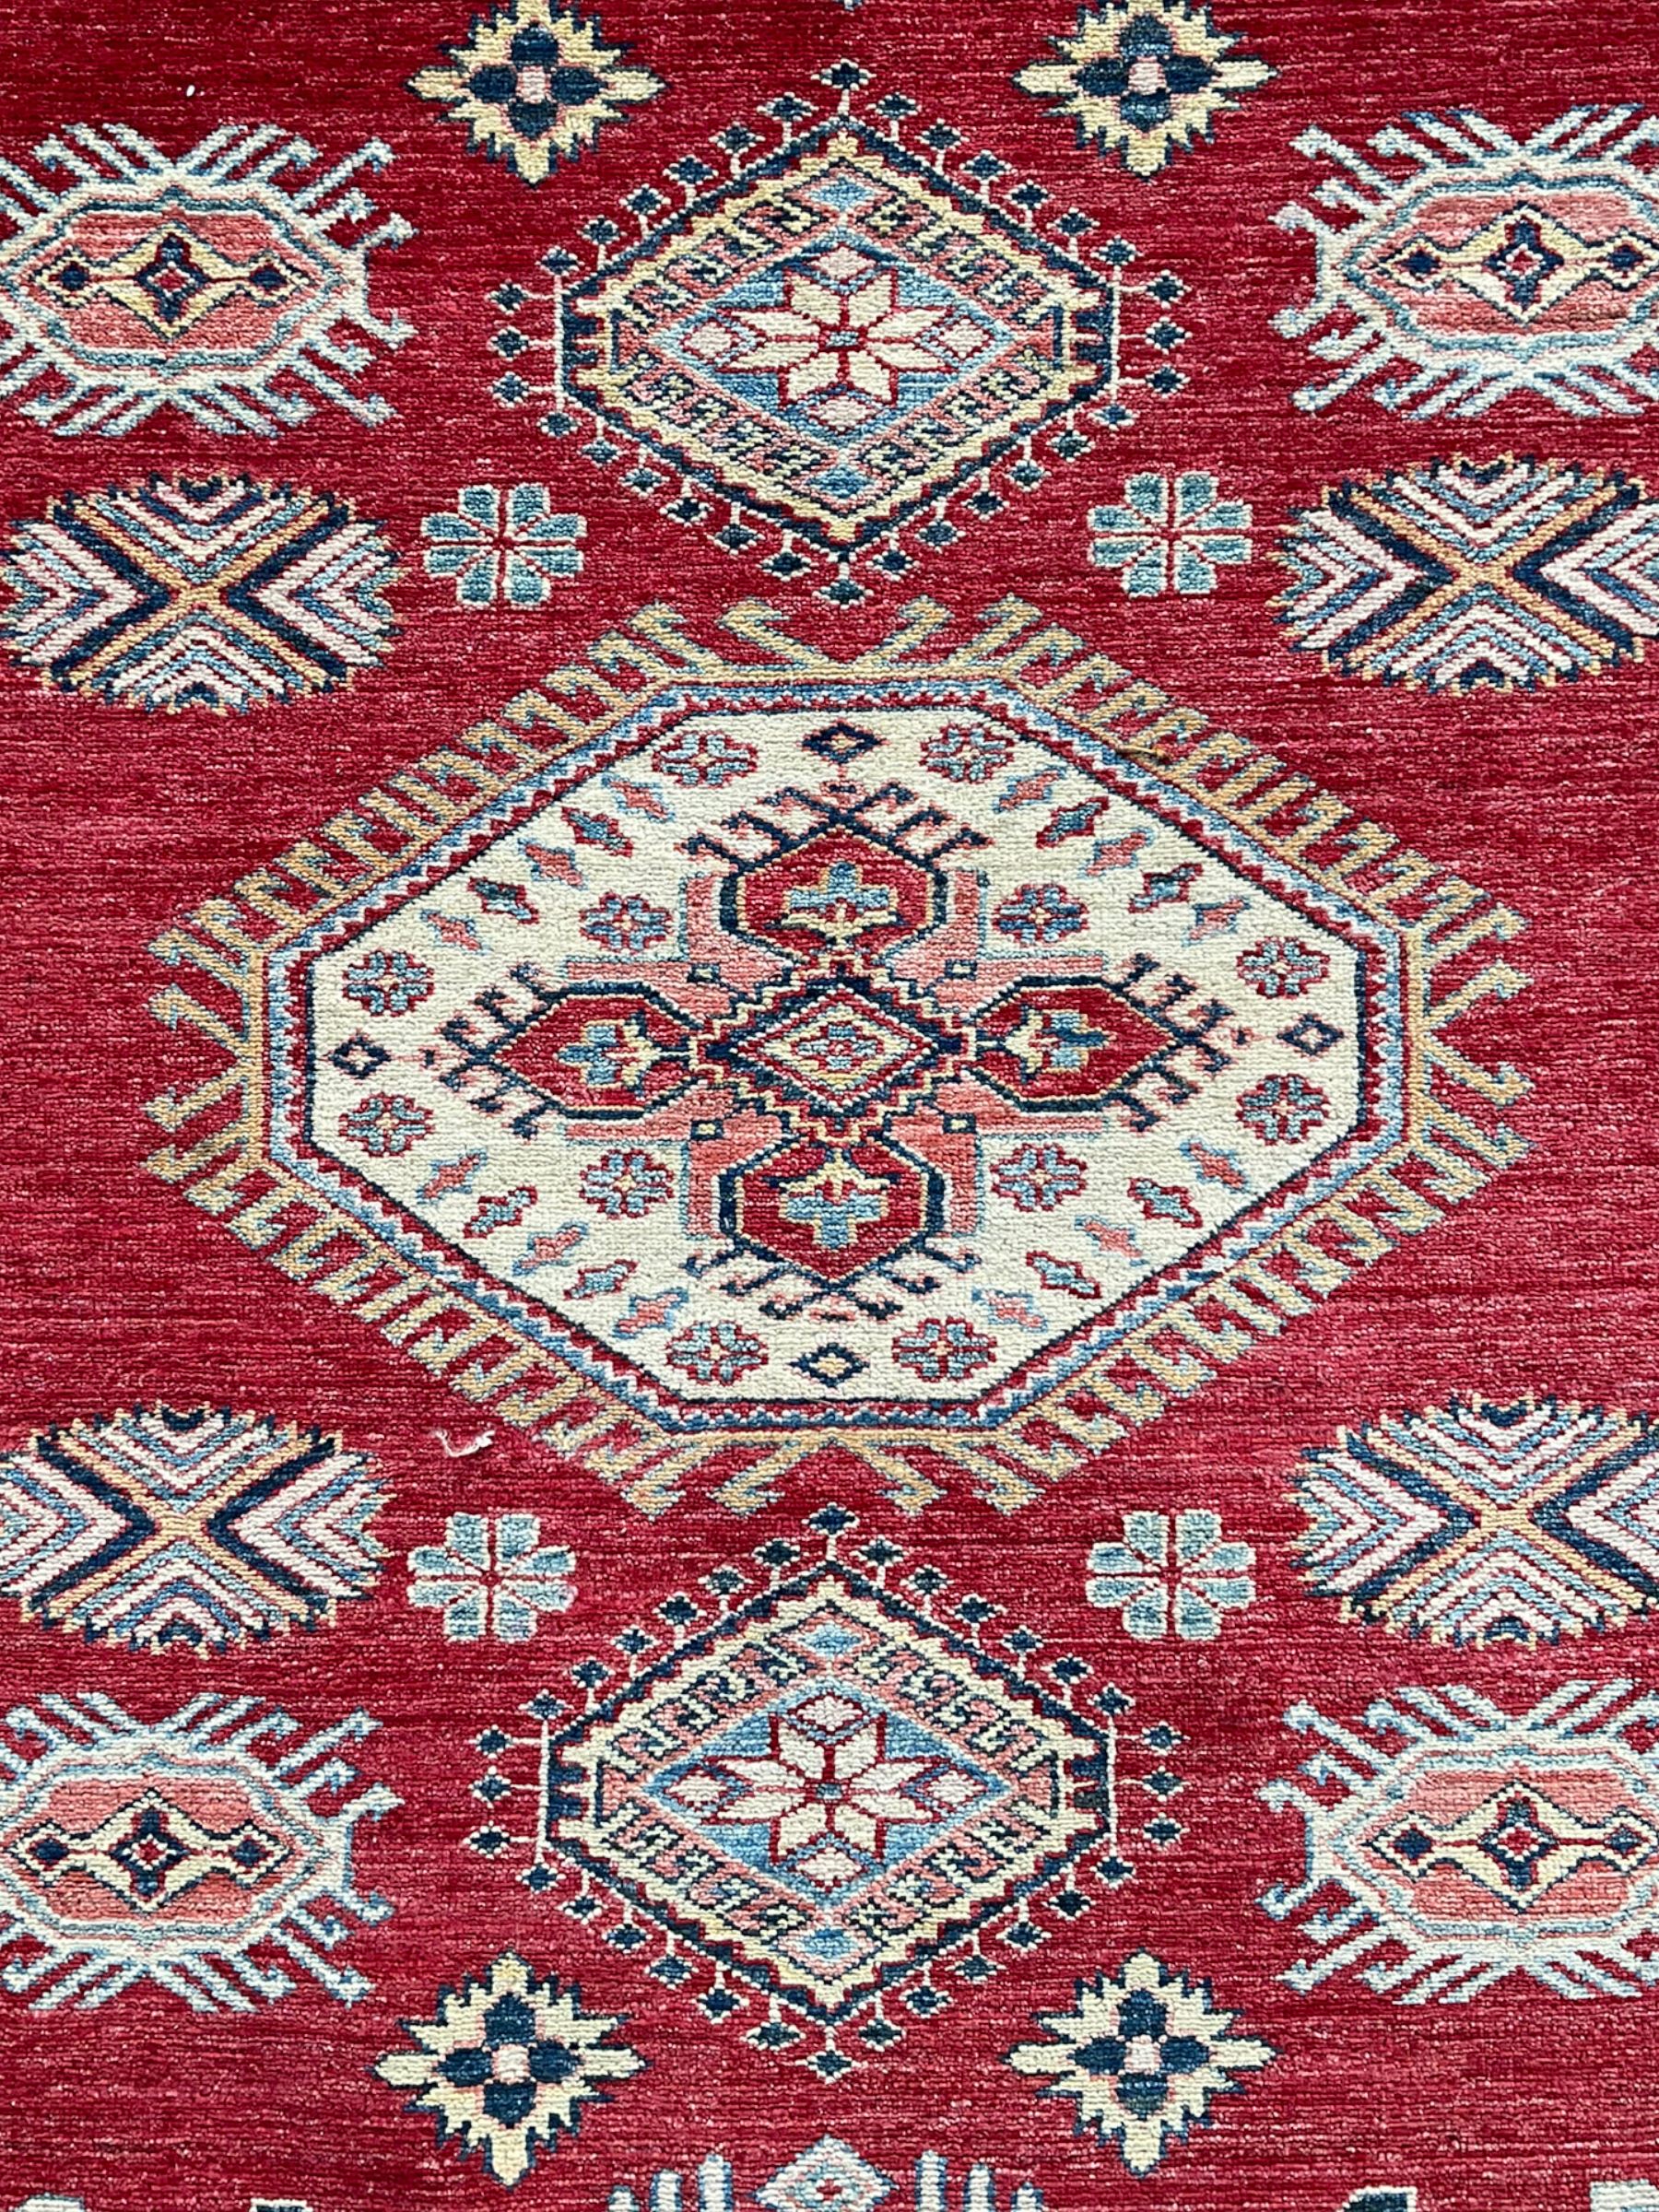 Large red ground carpet - Image 2 of 6